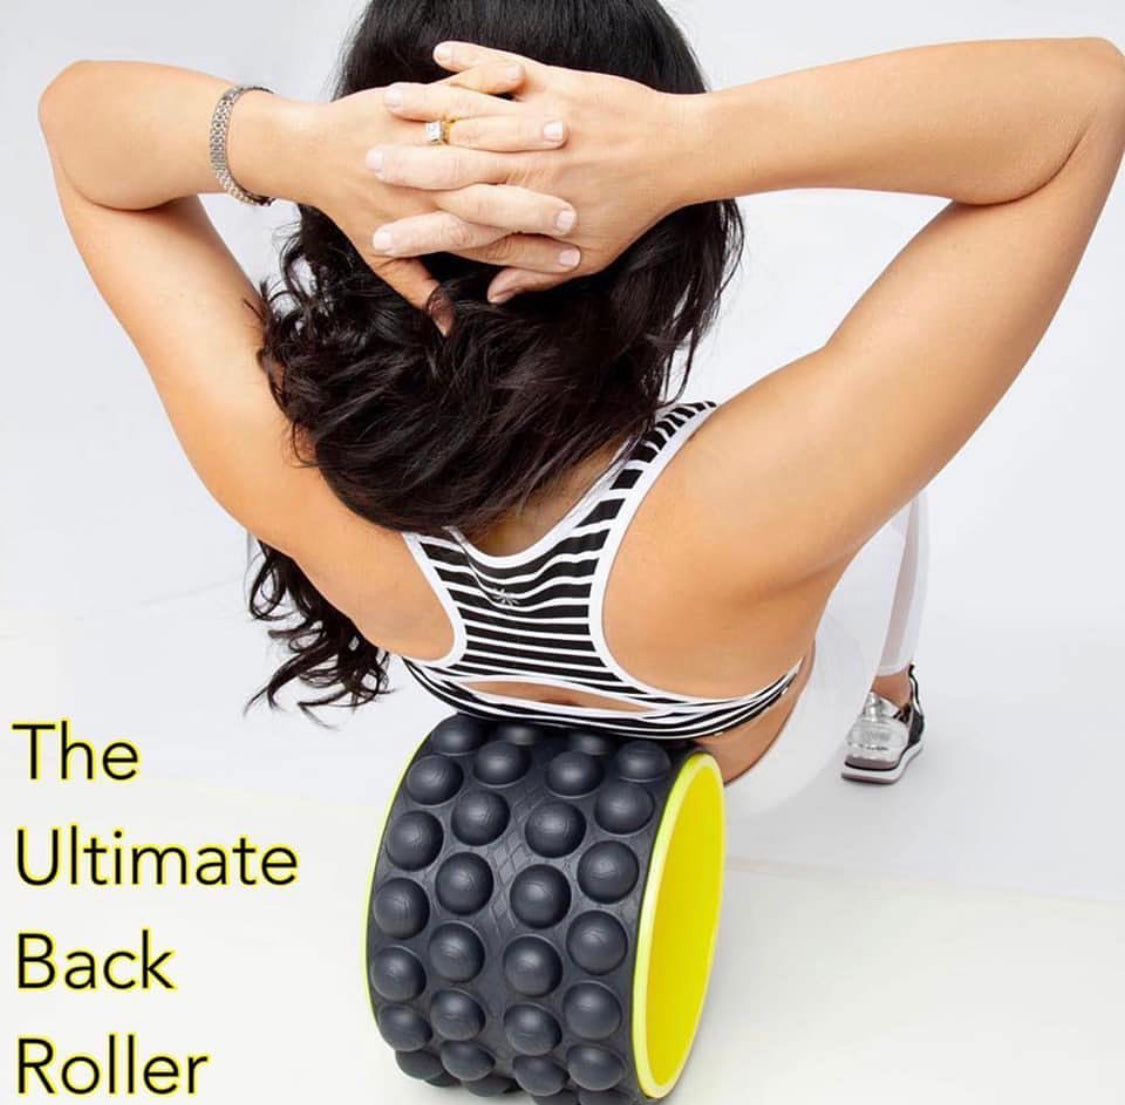 The Ultimate Back Roller